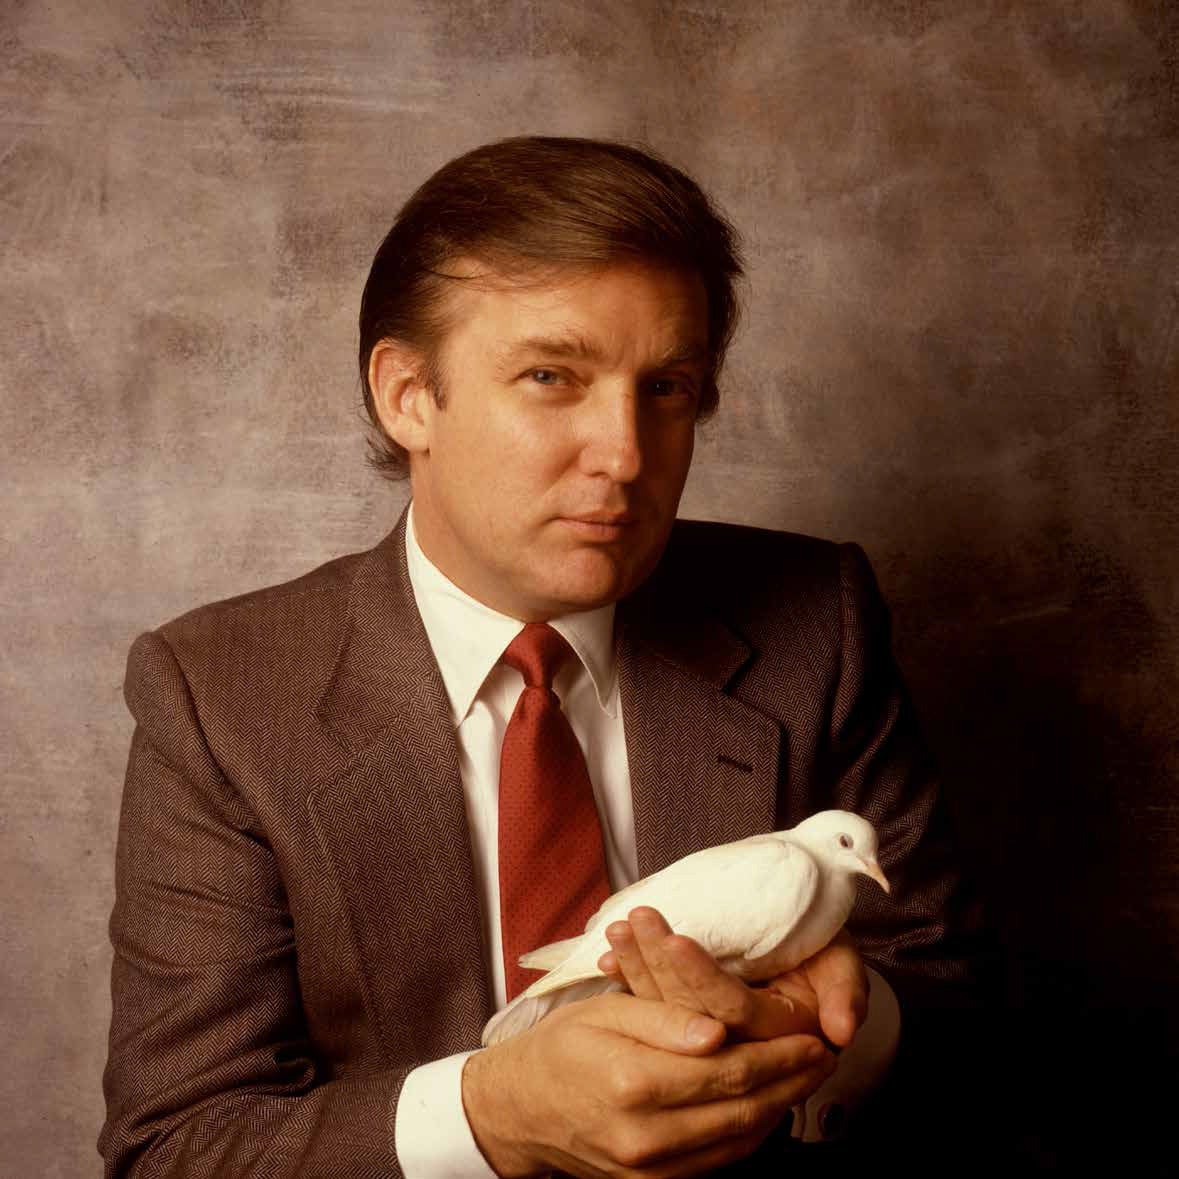 William Coupon Color Photograph - Donald Trump, Businessman